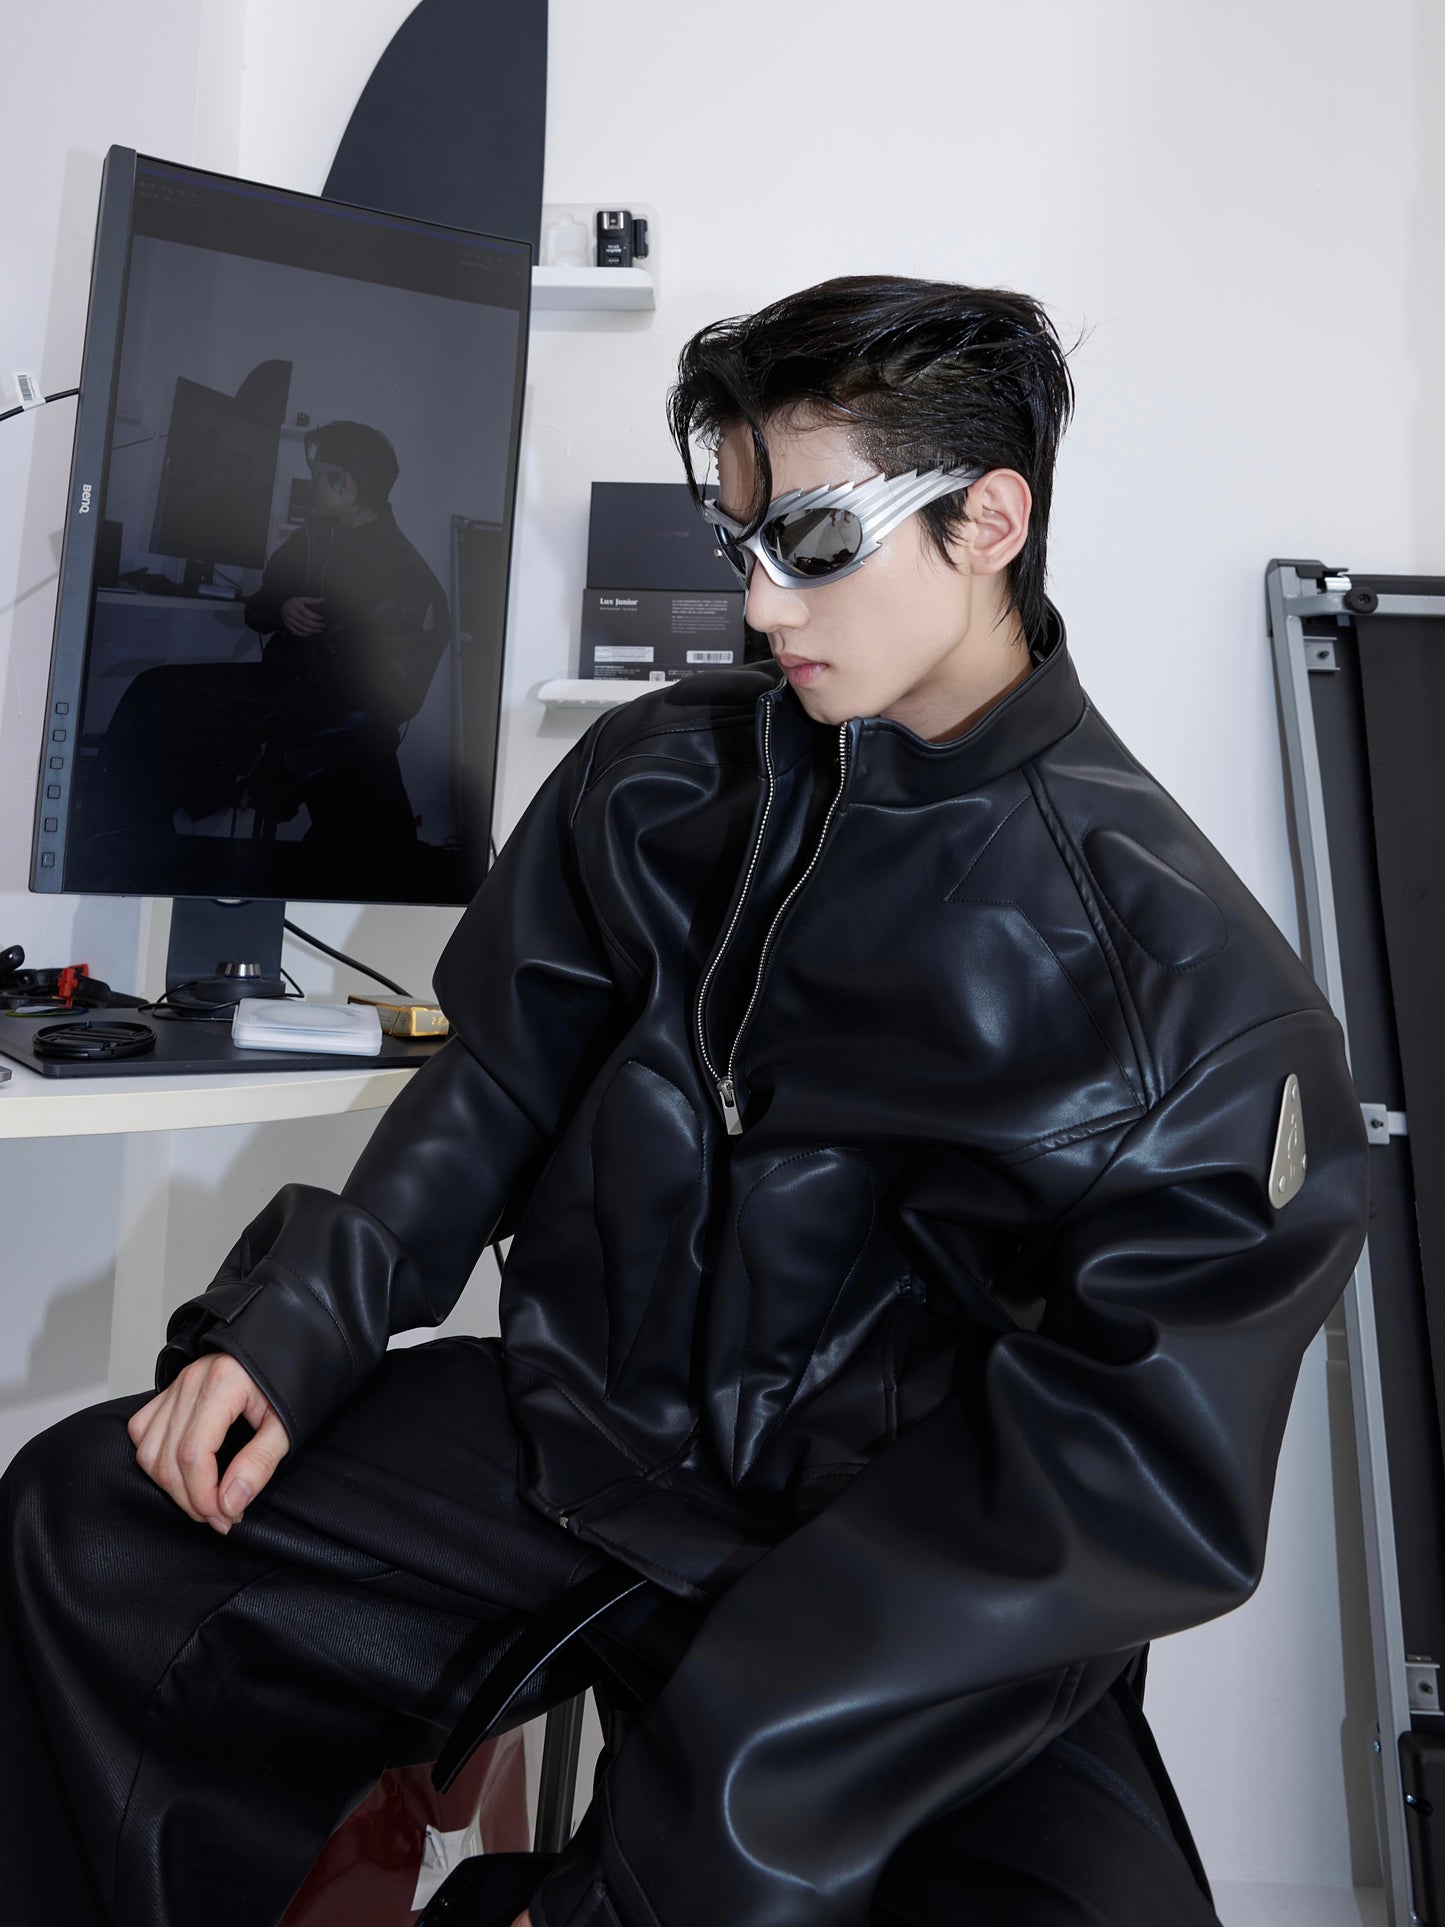 【23s September.】Metallic Logo 3D Deconstructed Leather Jacket